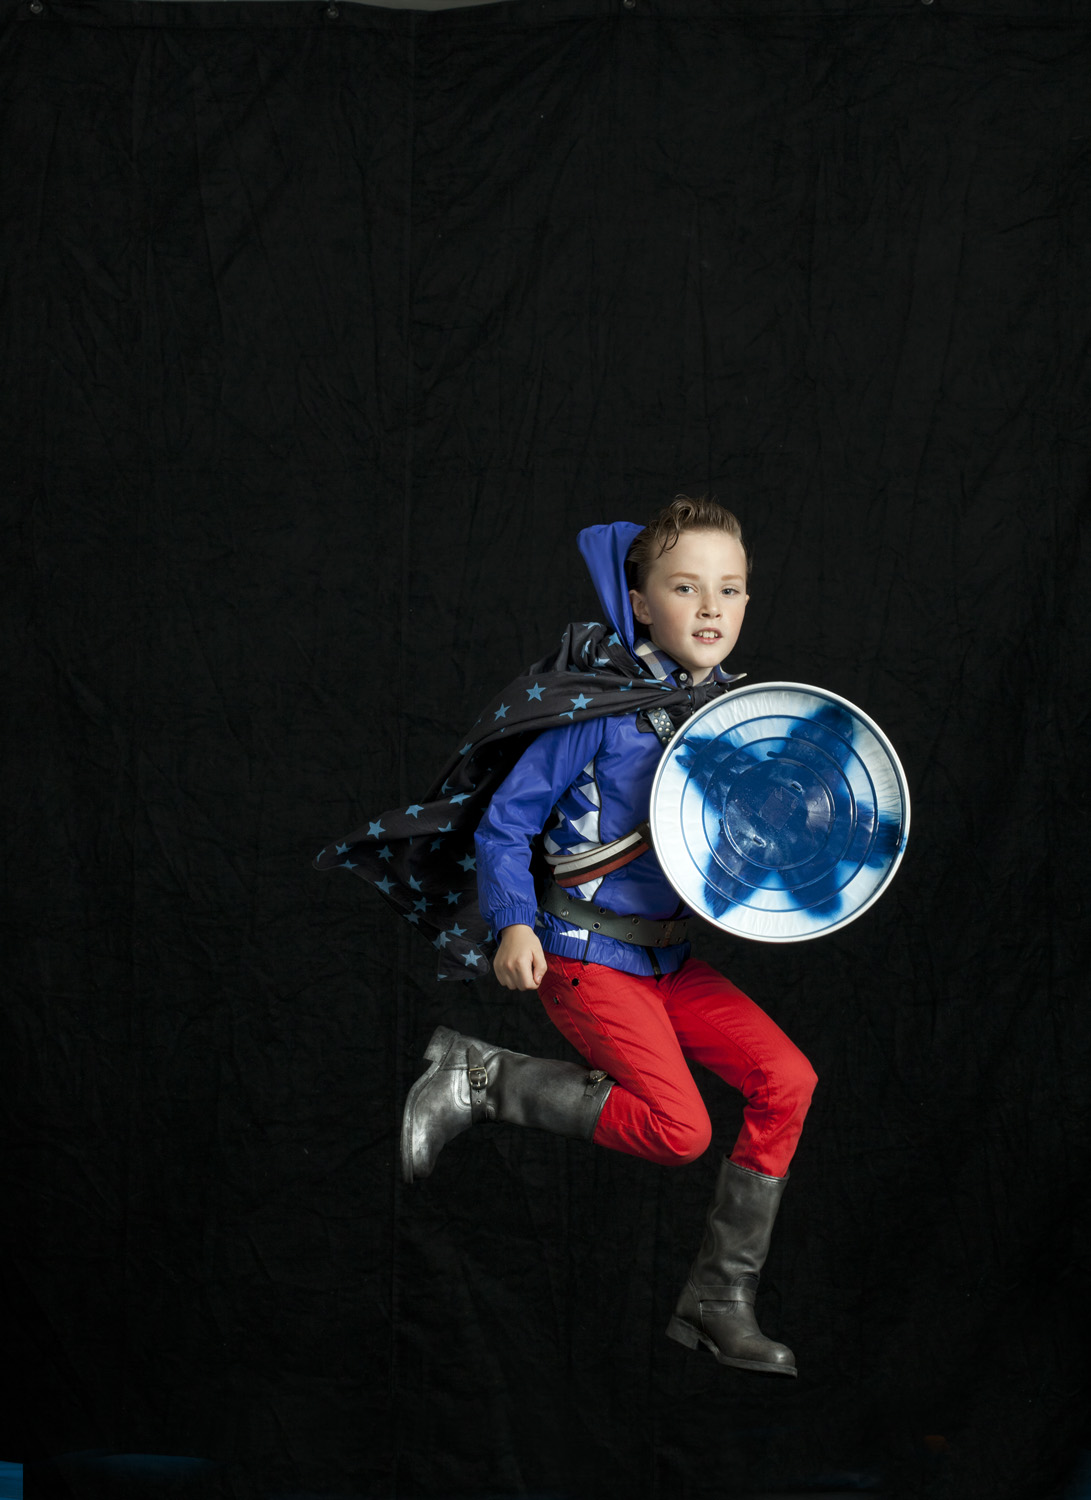 Julian as Captain America. Superhero fashion shoot for Papier Mache magazine. Stylist: Mindi Smith